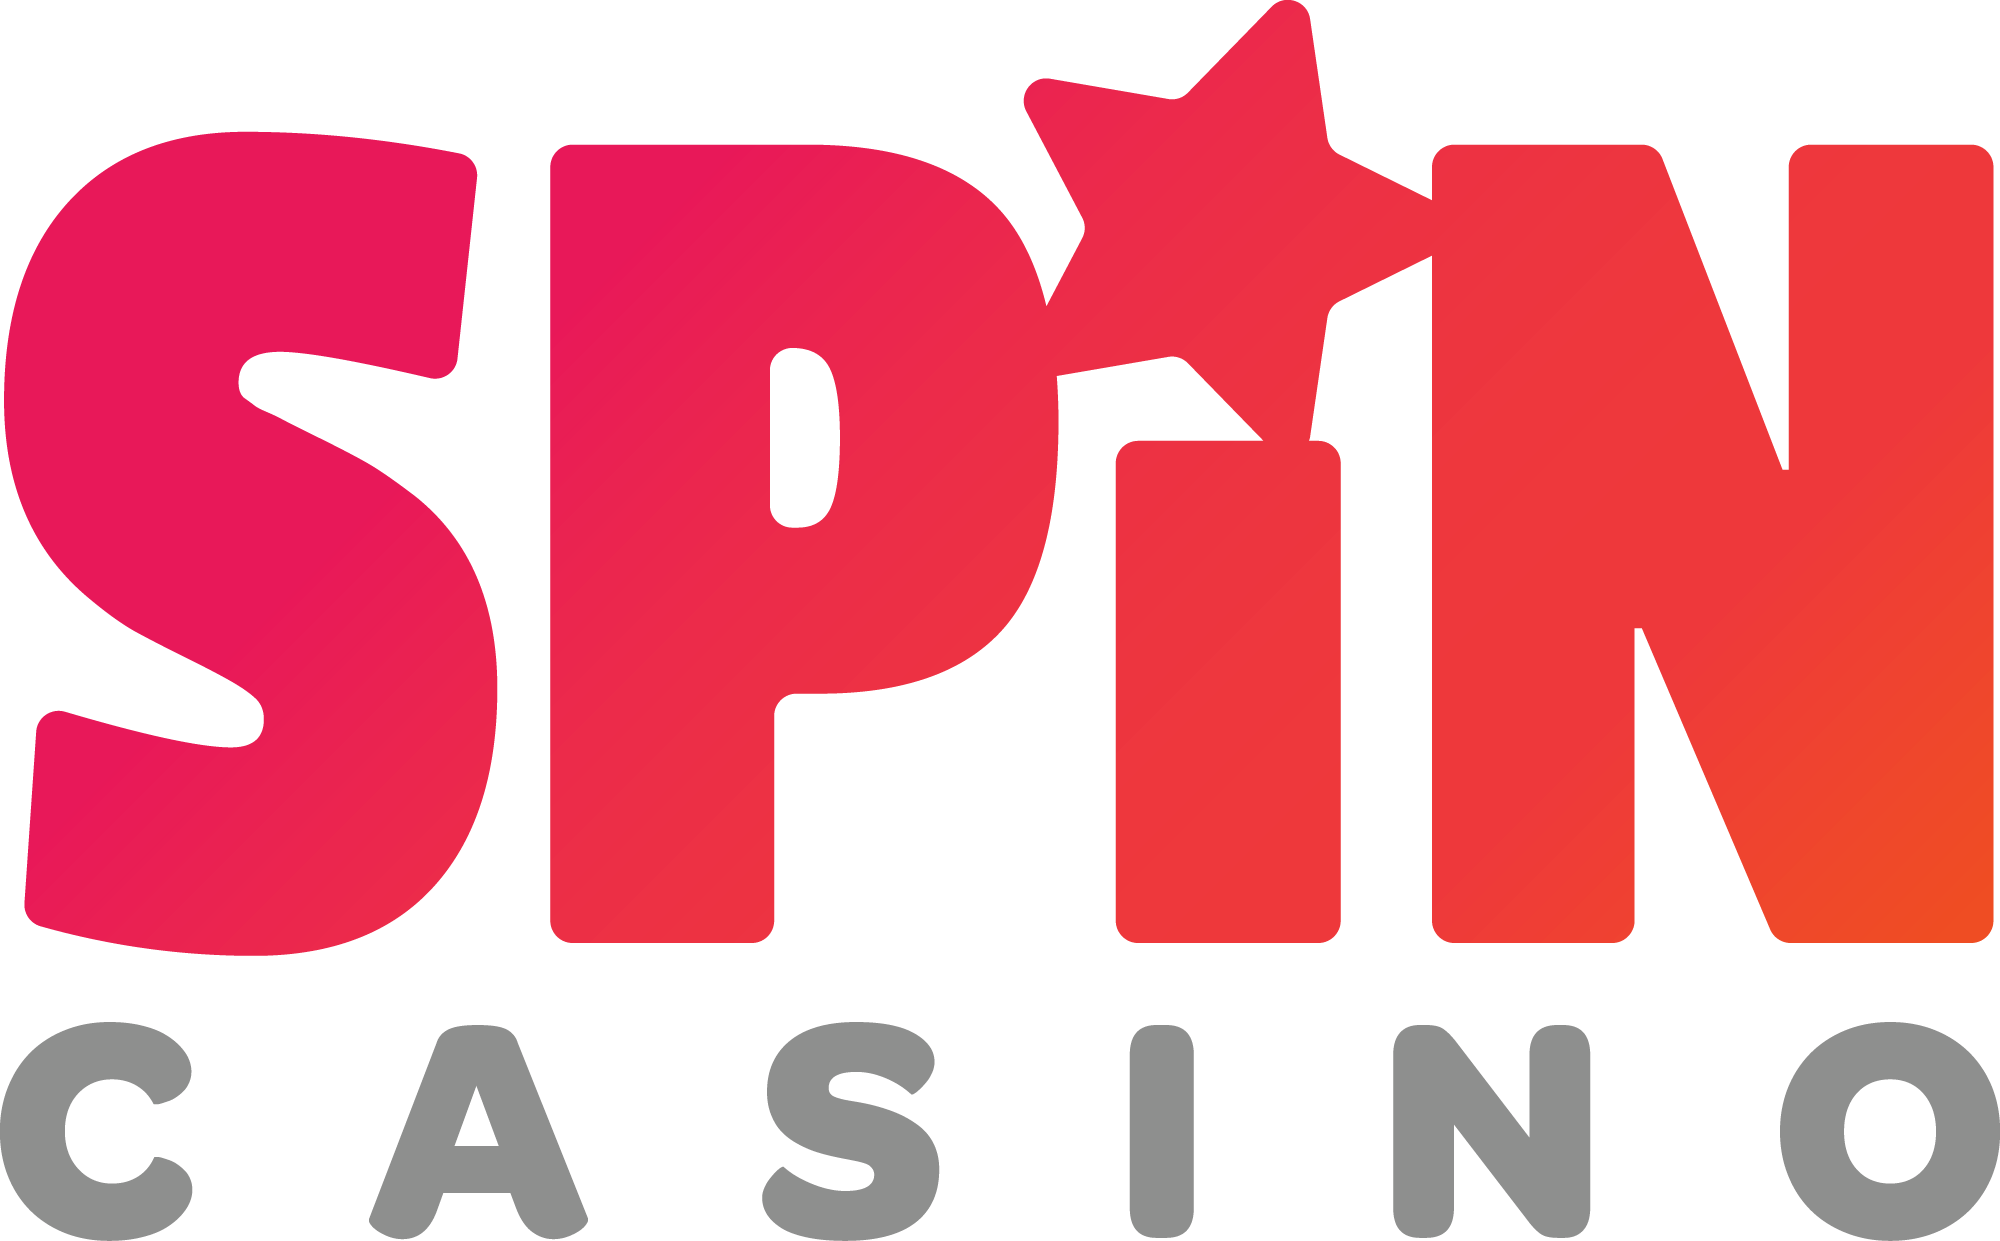 Spin better casino. Spin логотип. Spin Casino. Логотип Spin better. Casino магазин логотип.